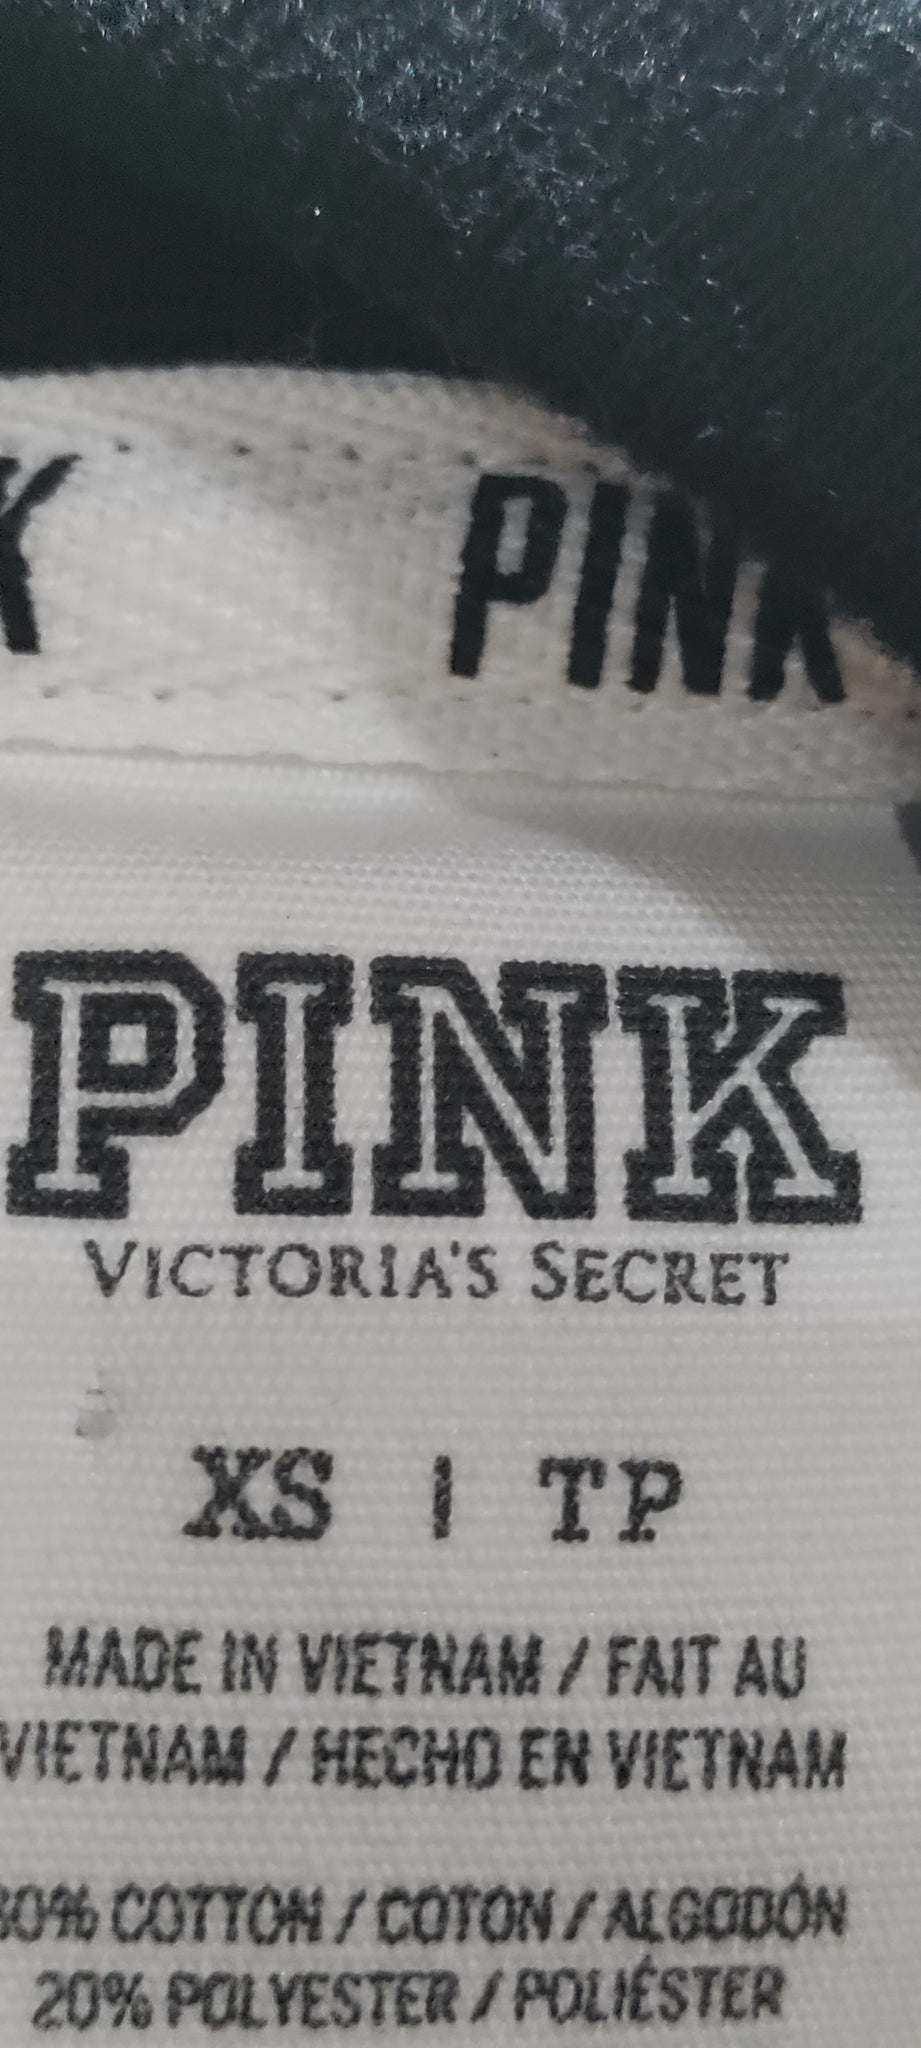 Victoria's secret Pink pullover sweater